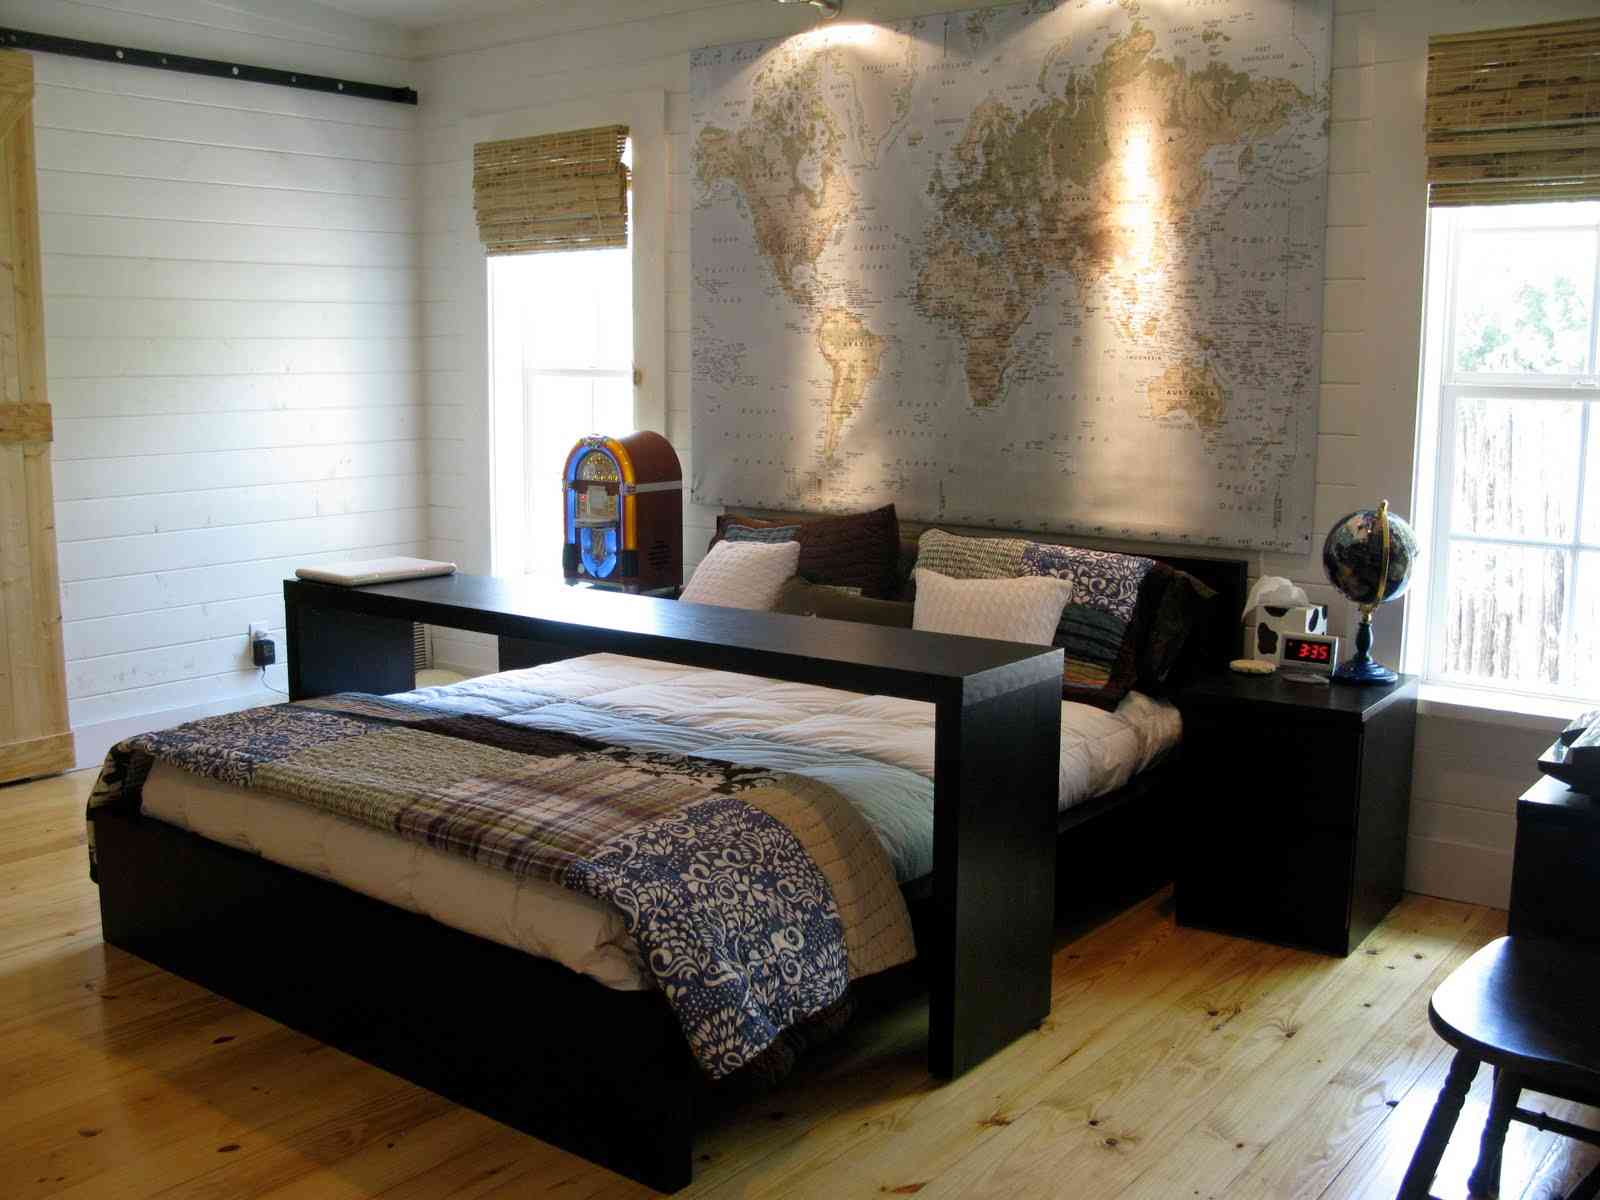 Bedroom furniture from IKEA - new bedroom 2015  Home 